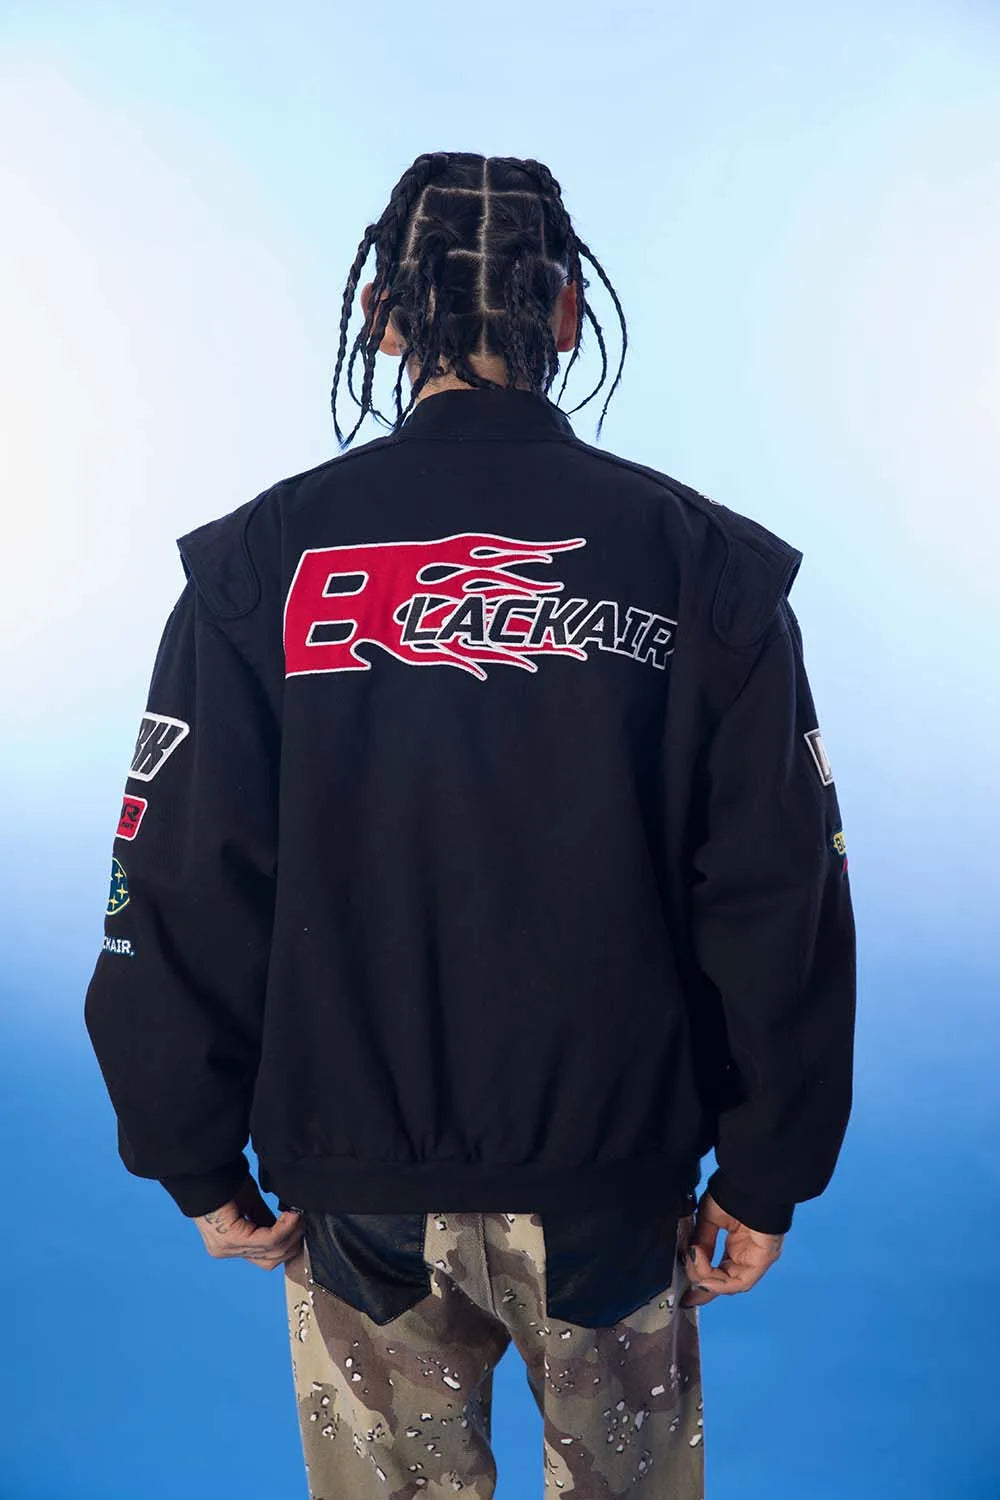 BLACK AIR Retro Racing Jacket